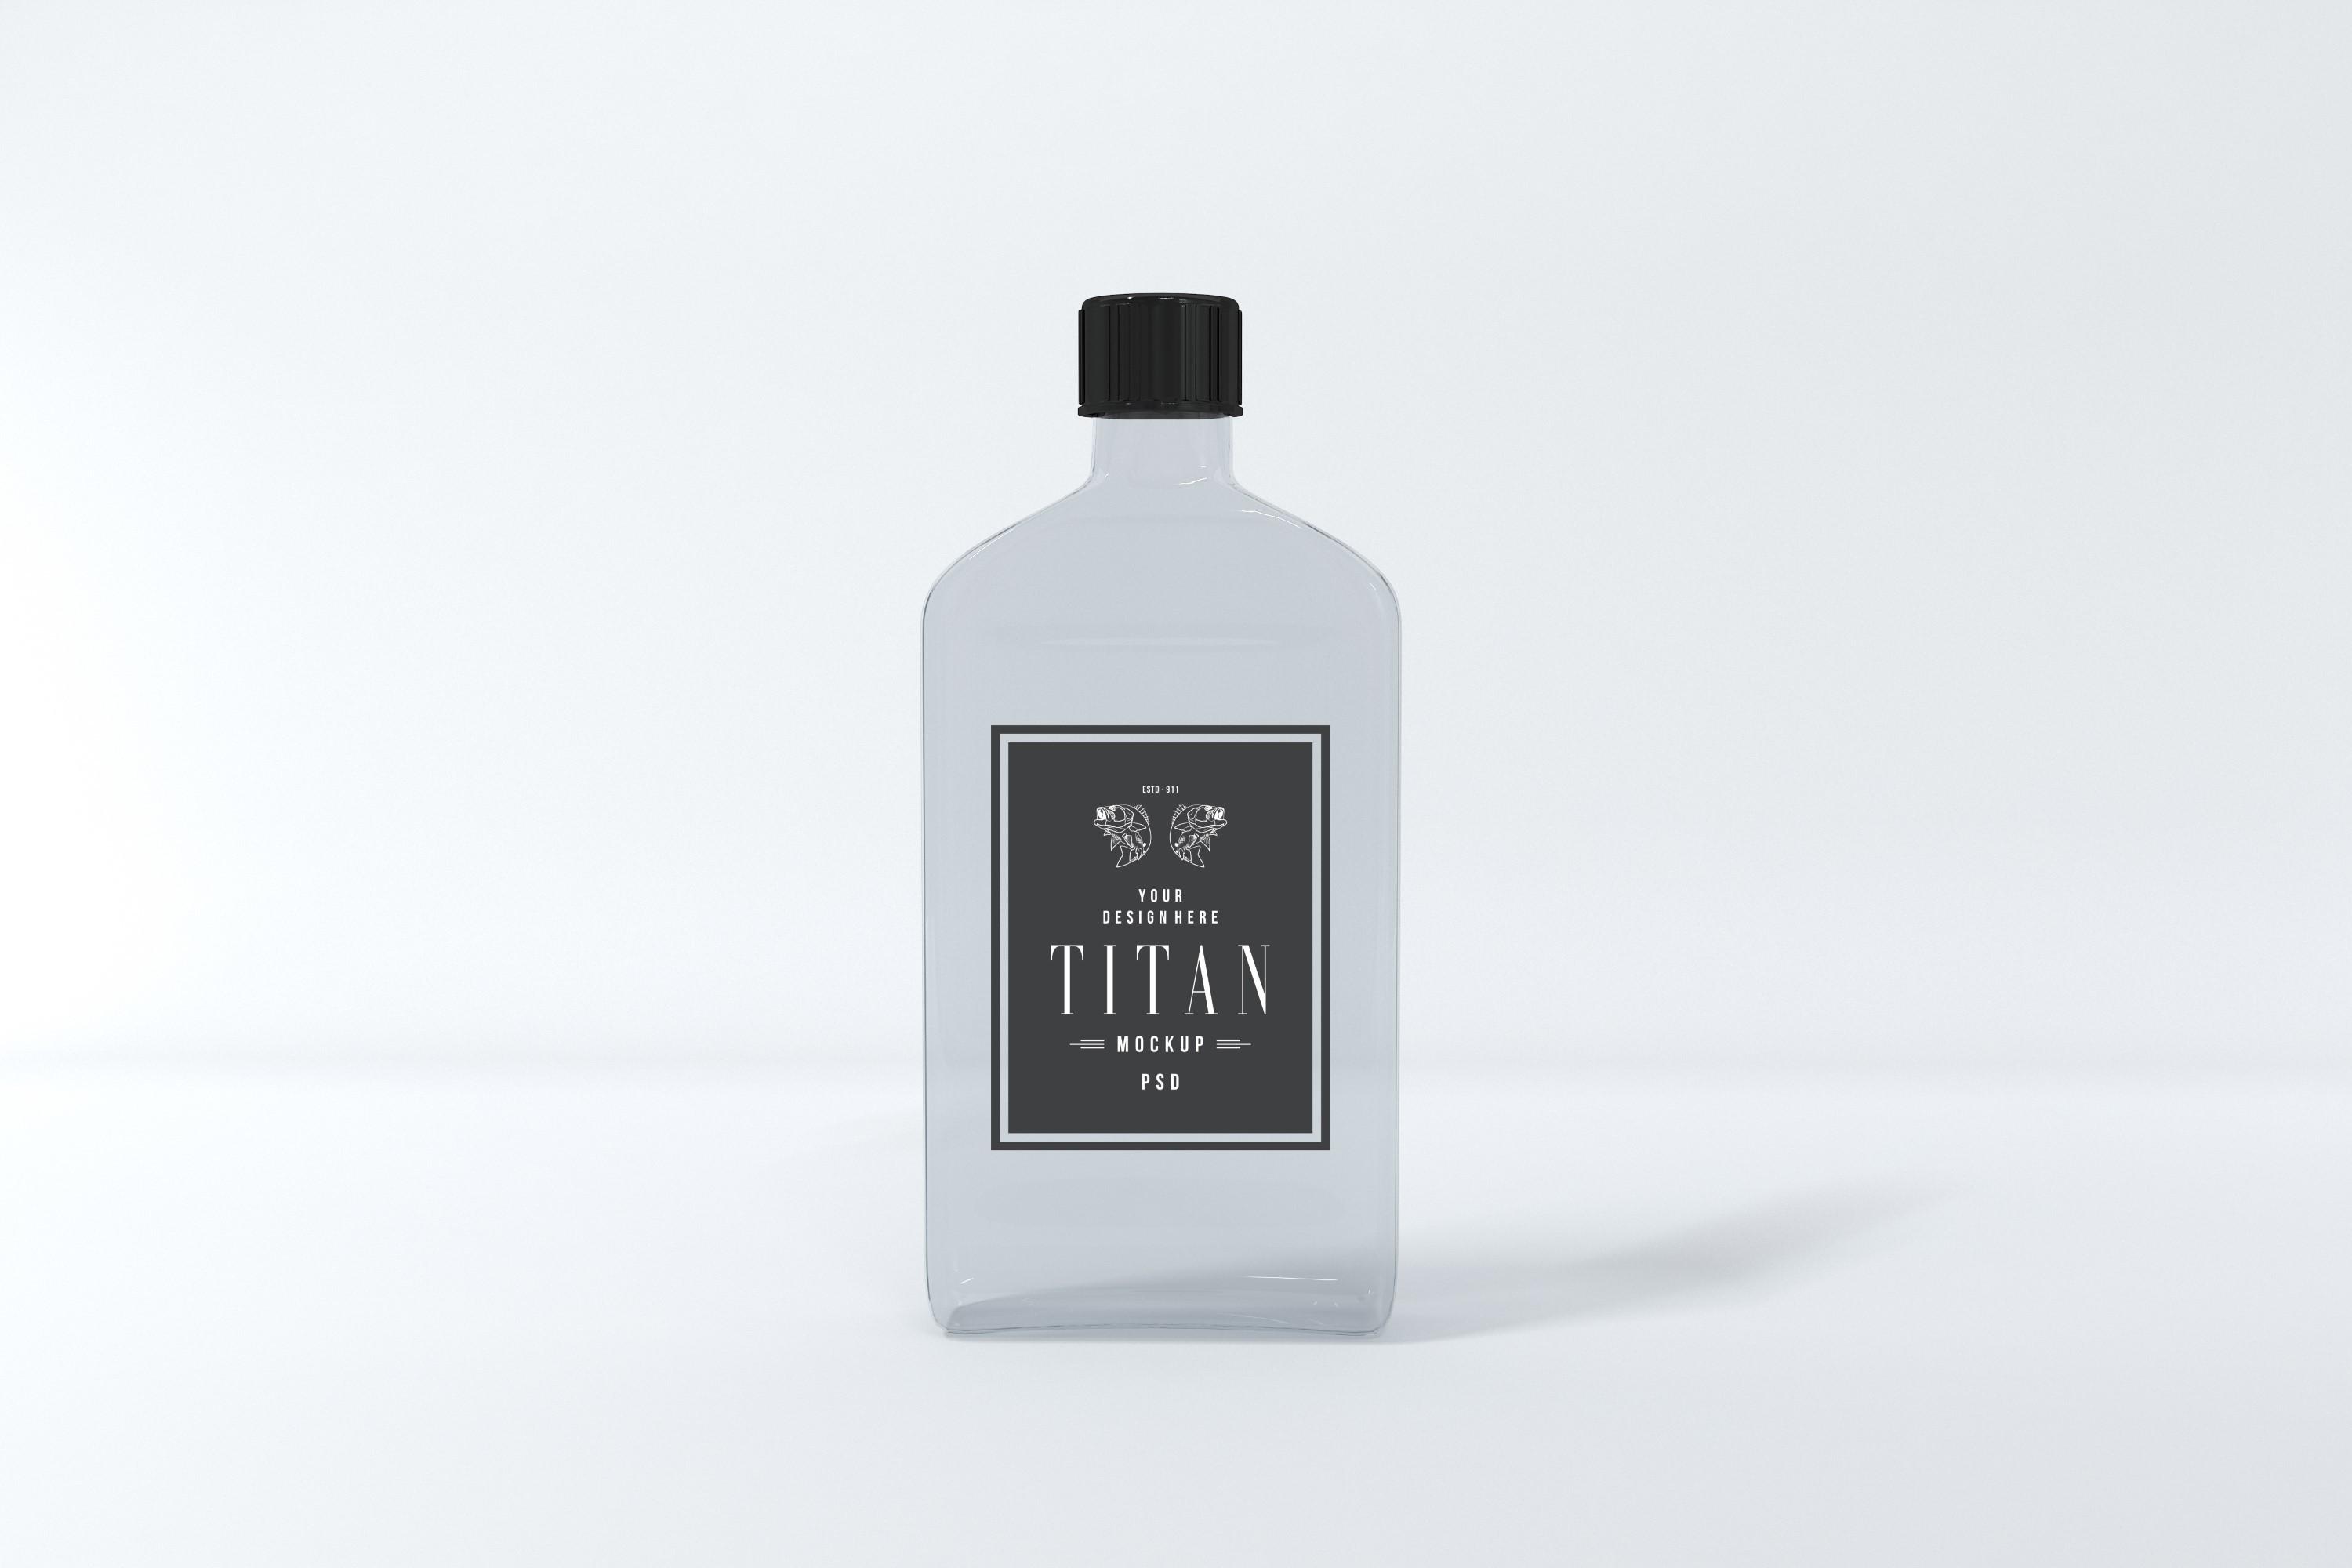 Titan Bottle Mockup